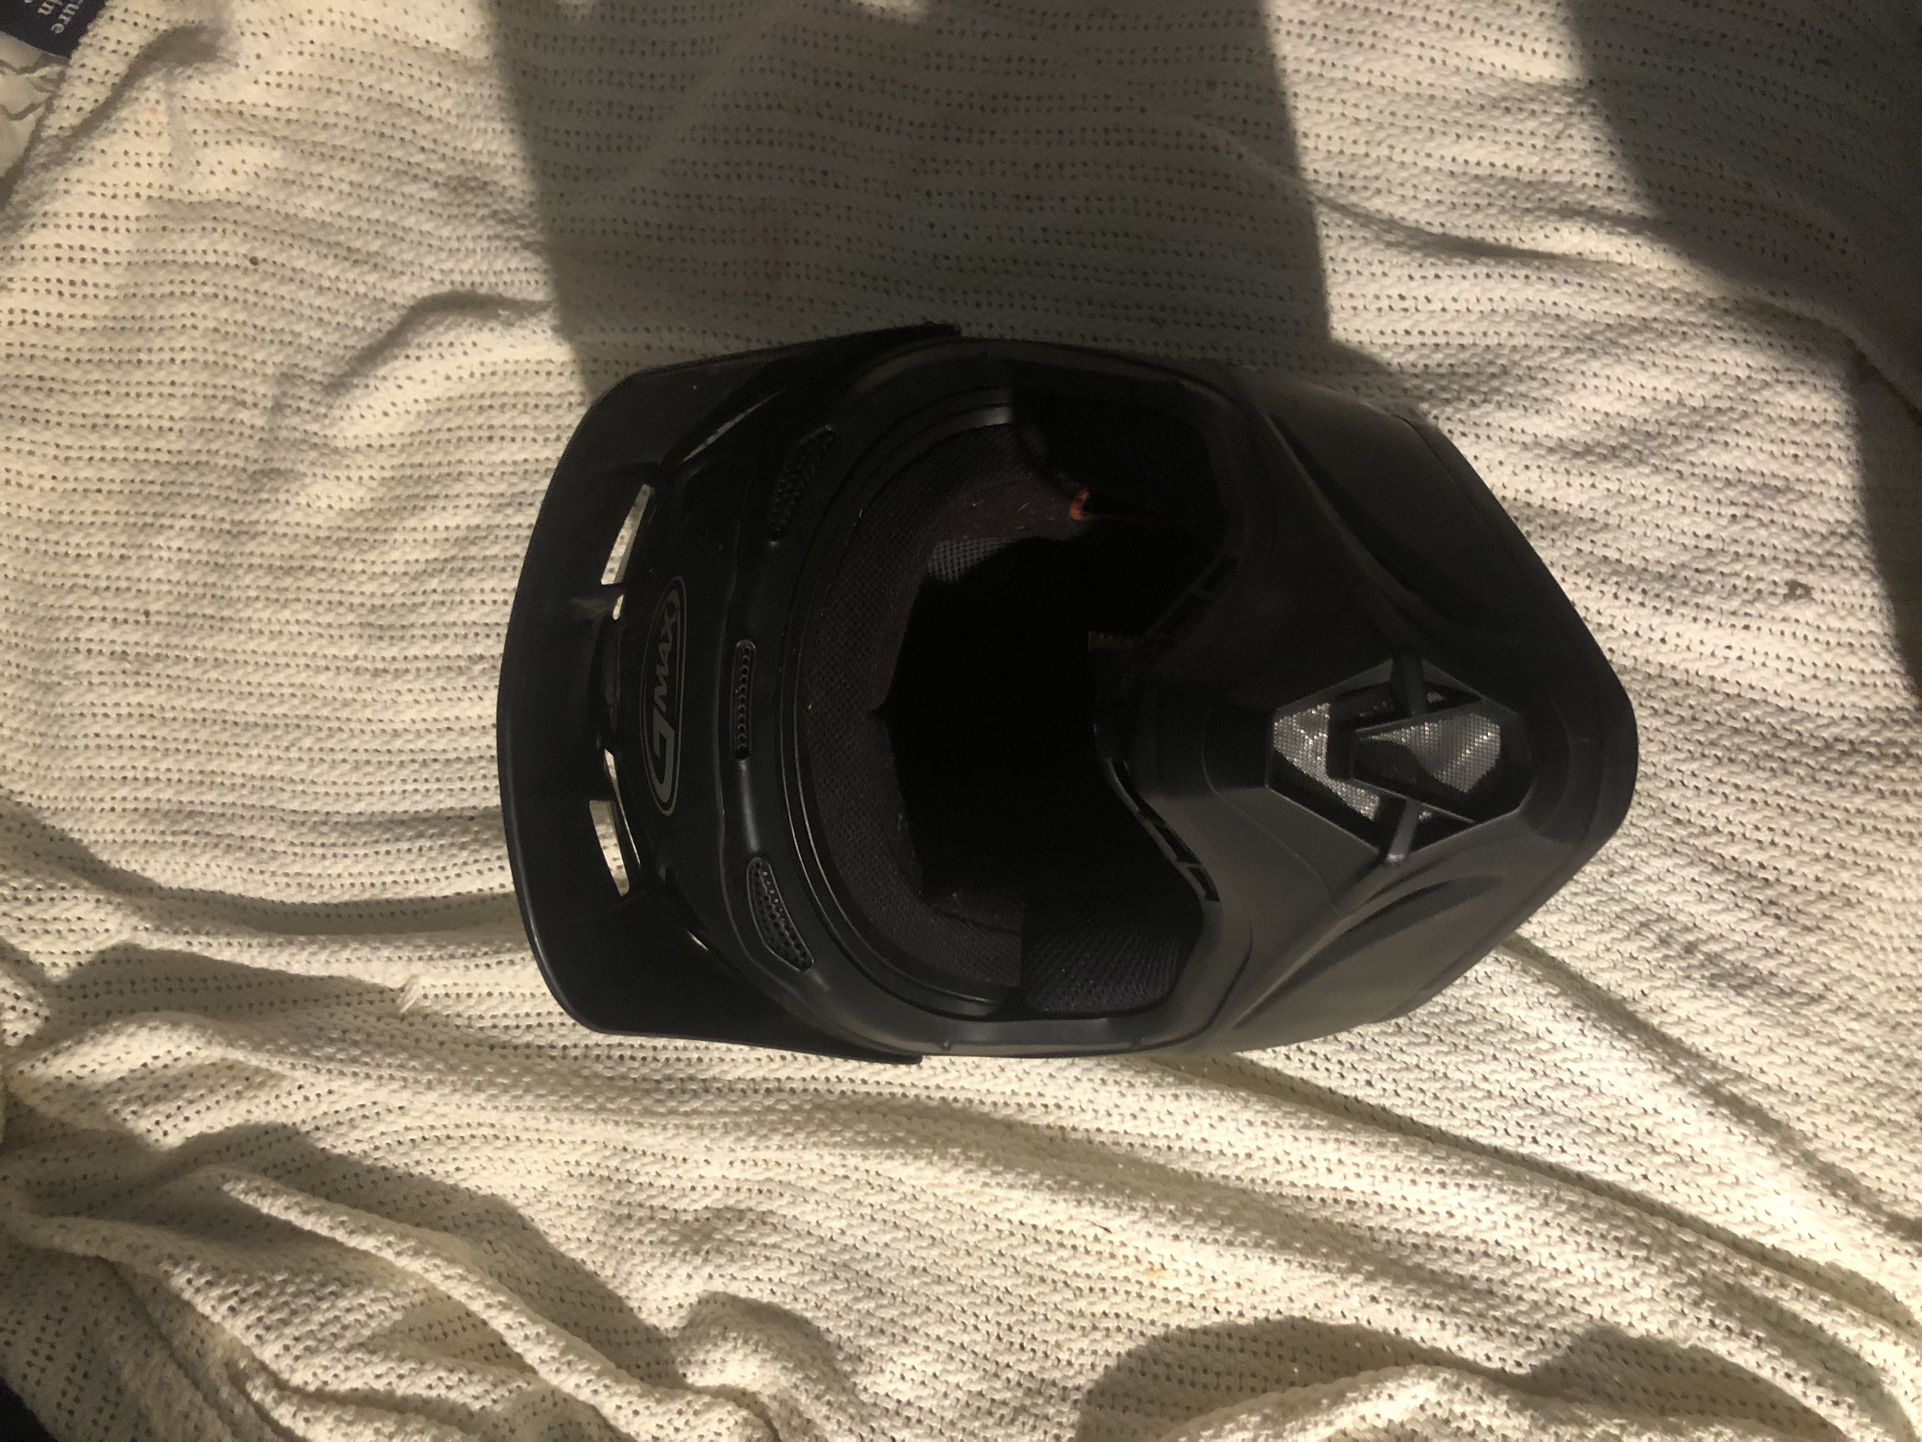 Large Full face Motorcycle Helmet